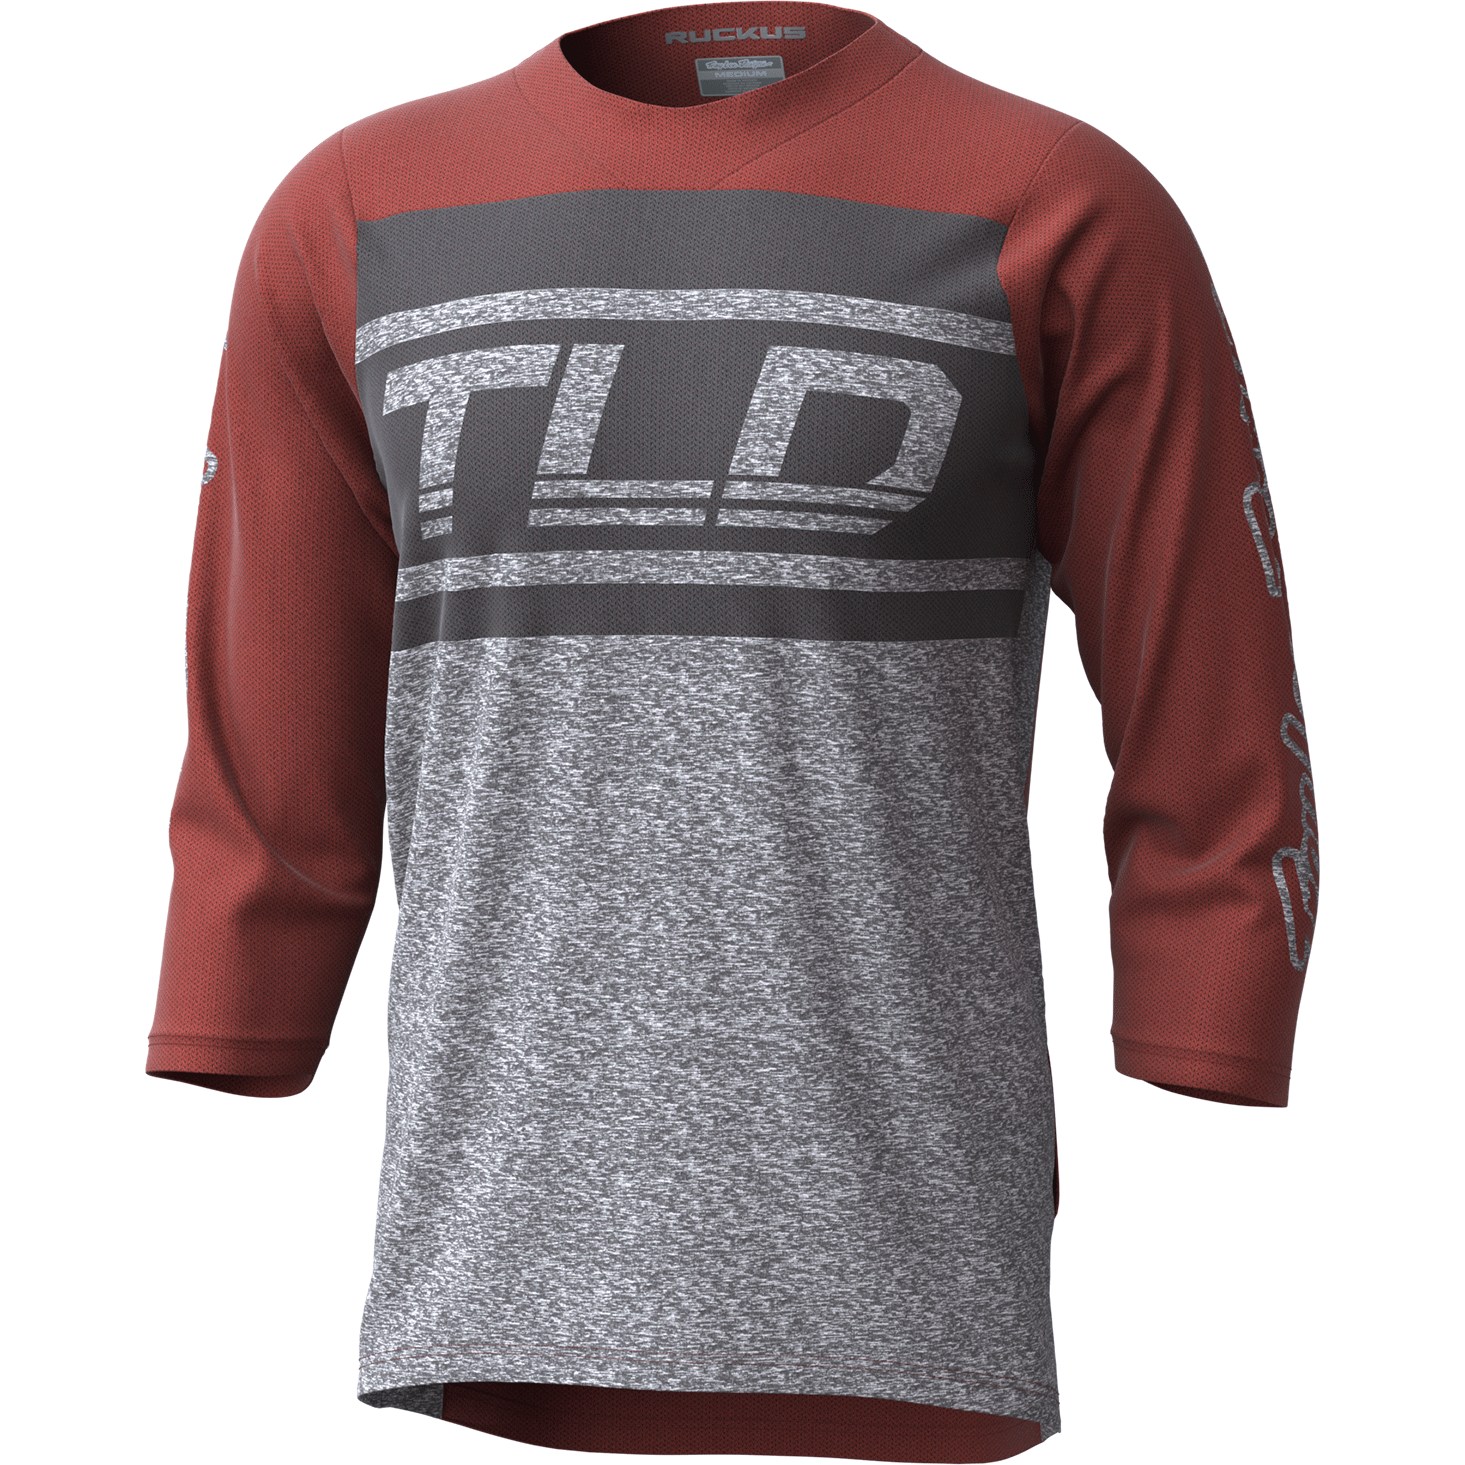 Productfoto van Troy Lee Designs Ruckus Shirt met 3/4-Mouwen - bars red clay / gray heather